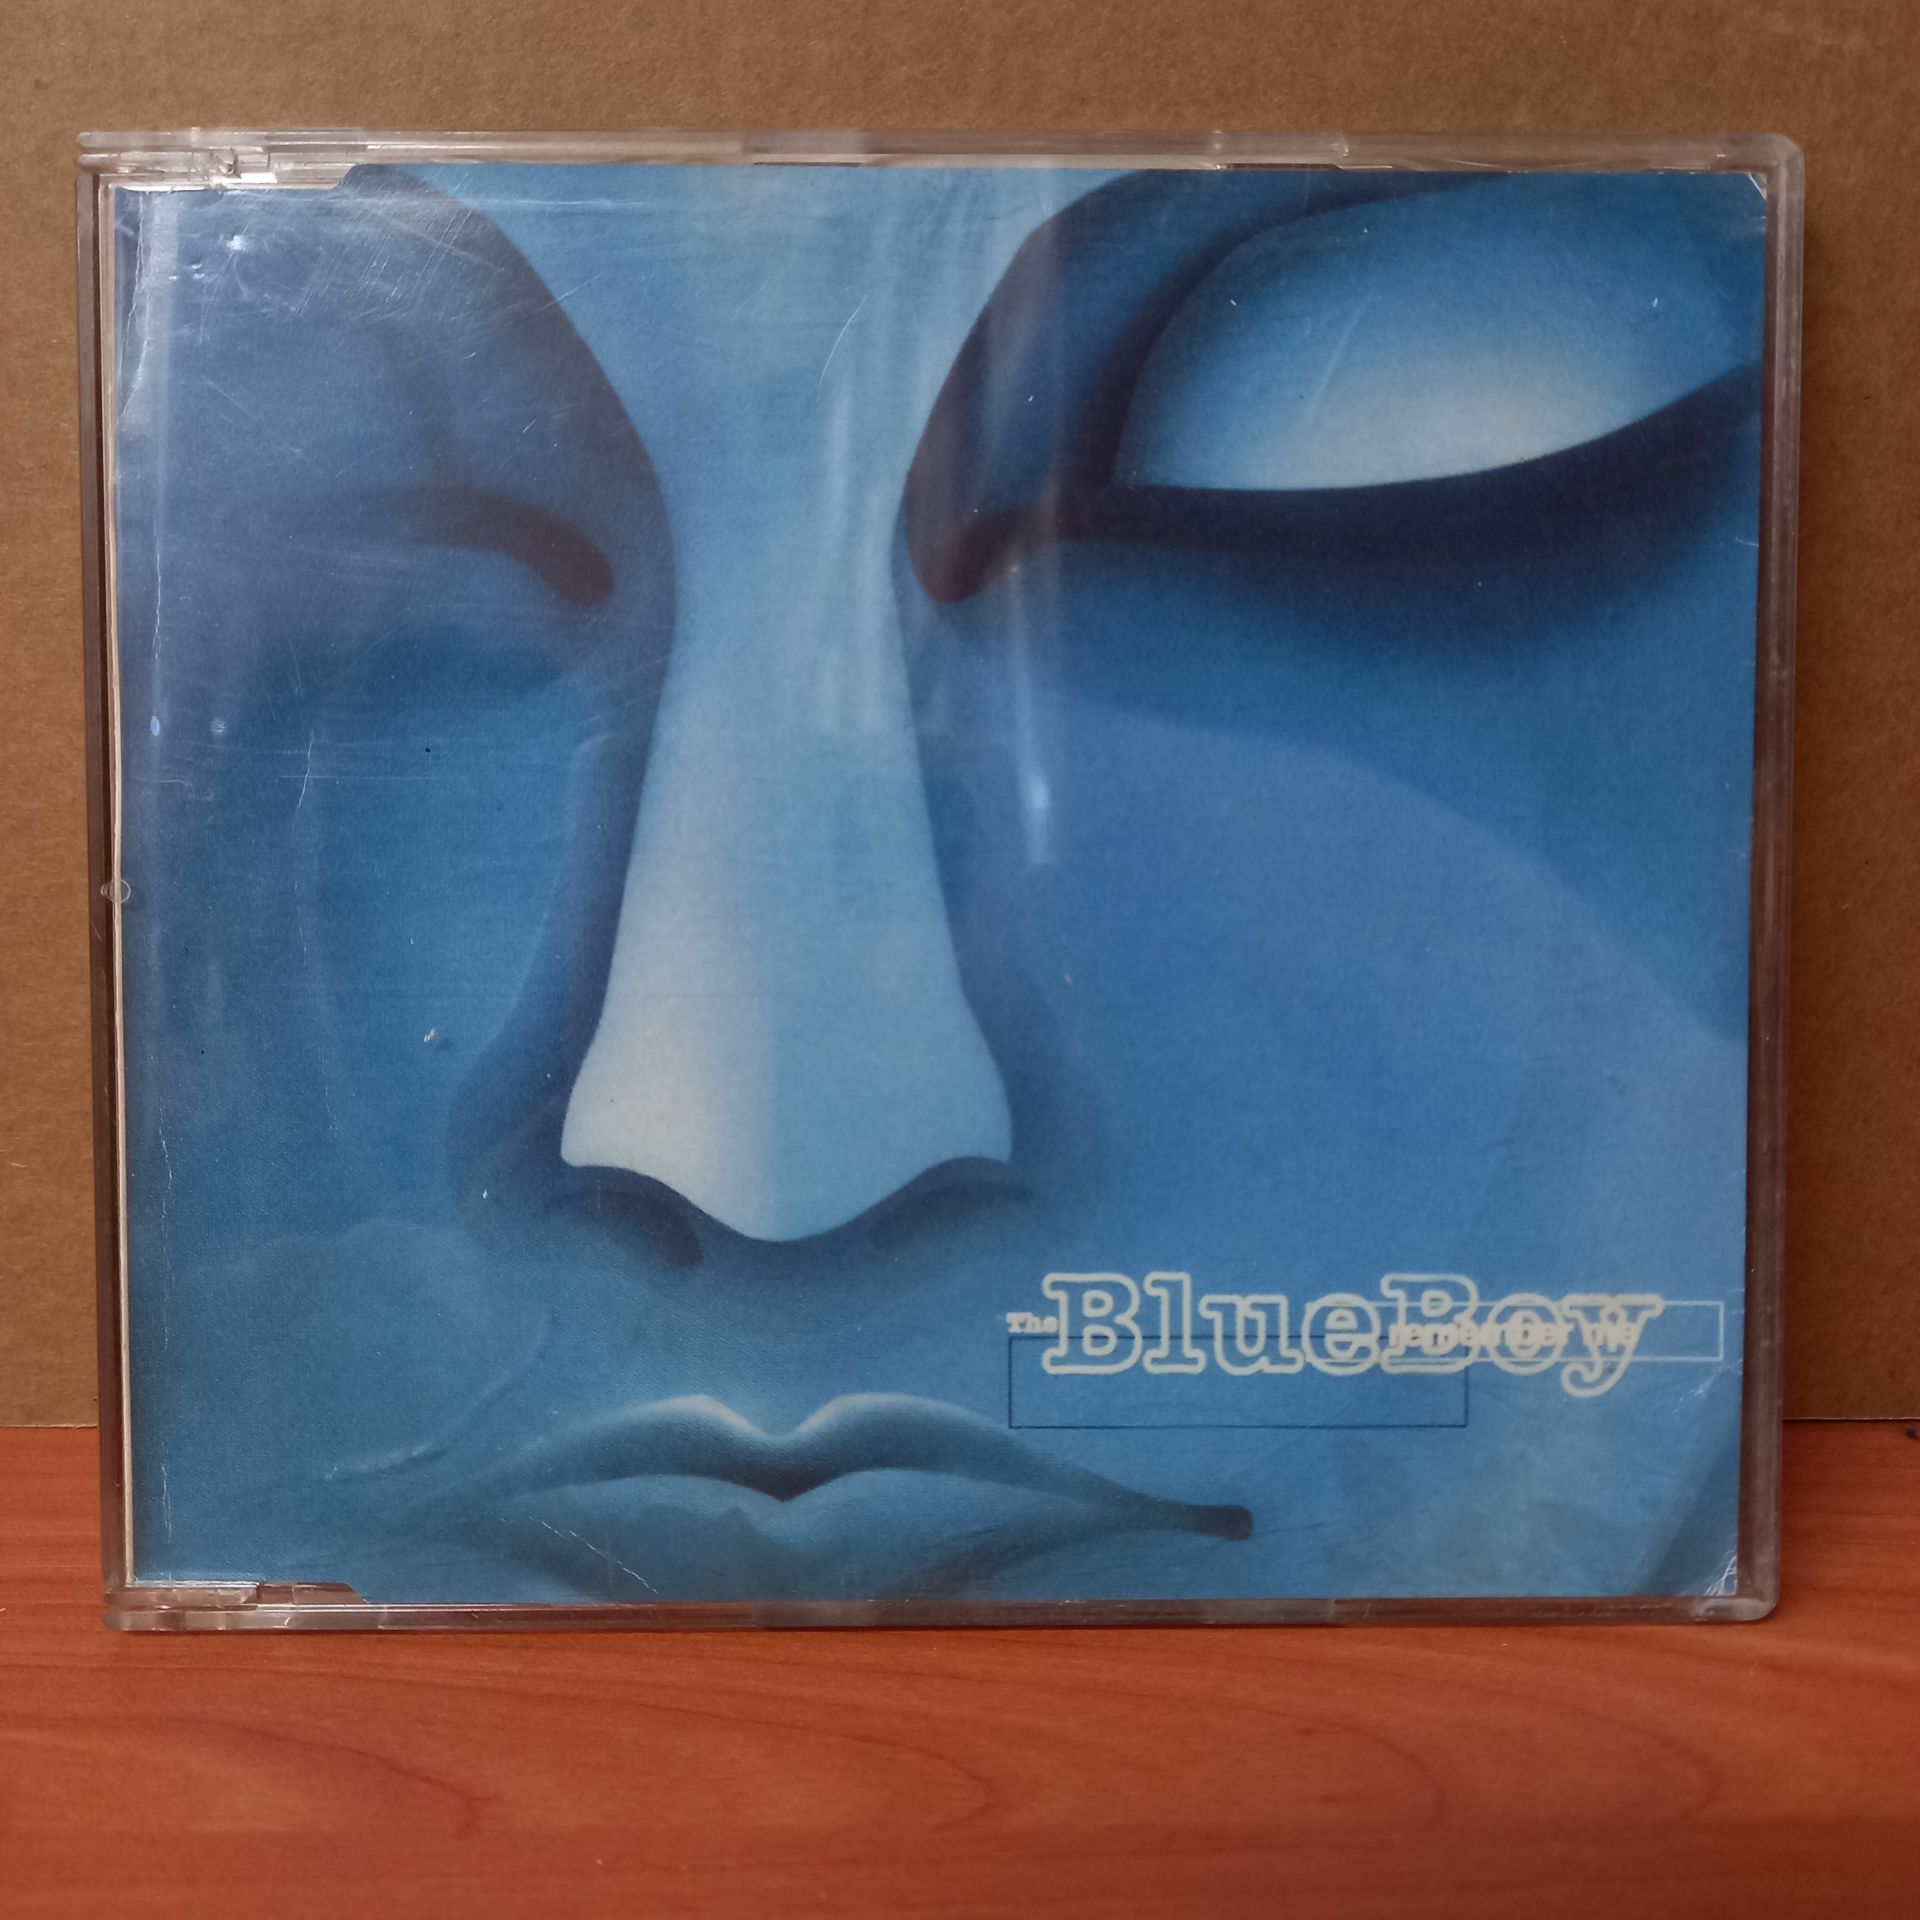 THE BLUE BOY - REMEMBER ME (1997) - CD SINGLE 2.EL